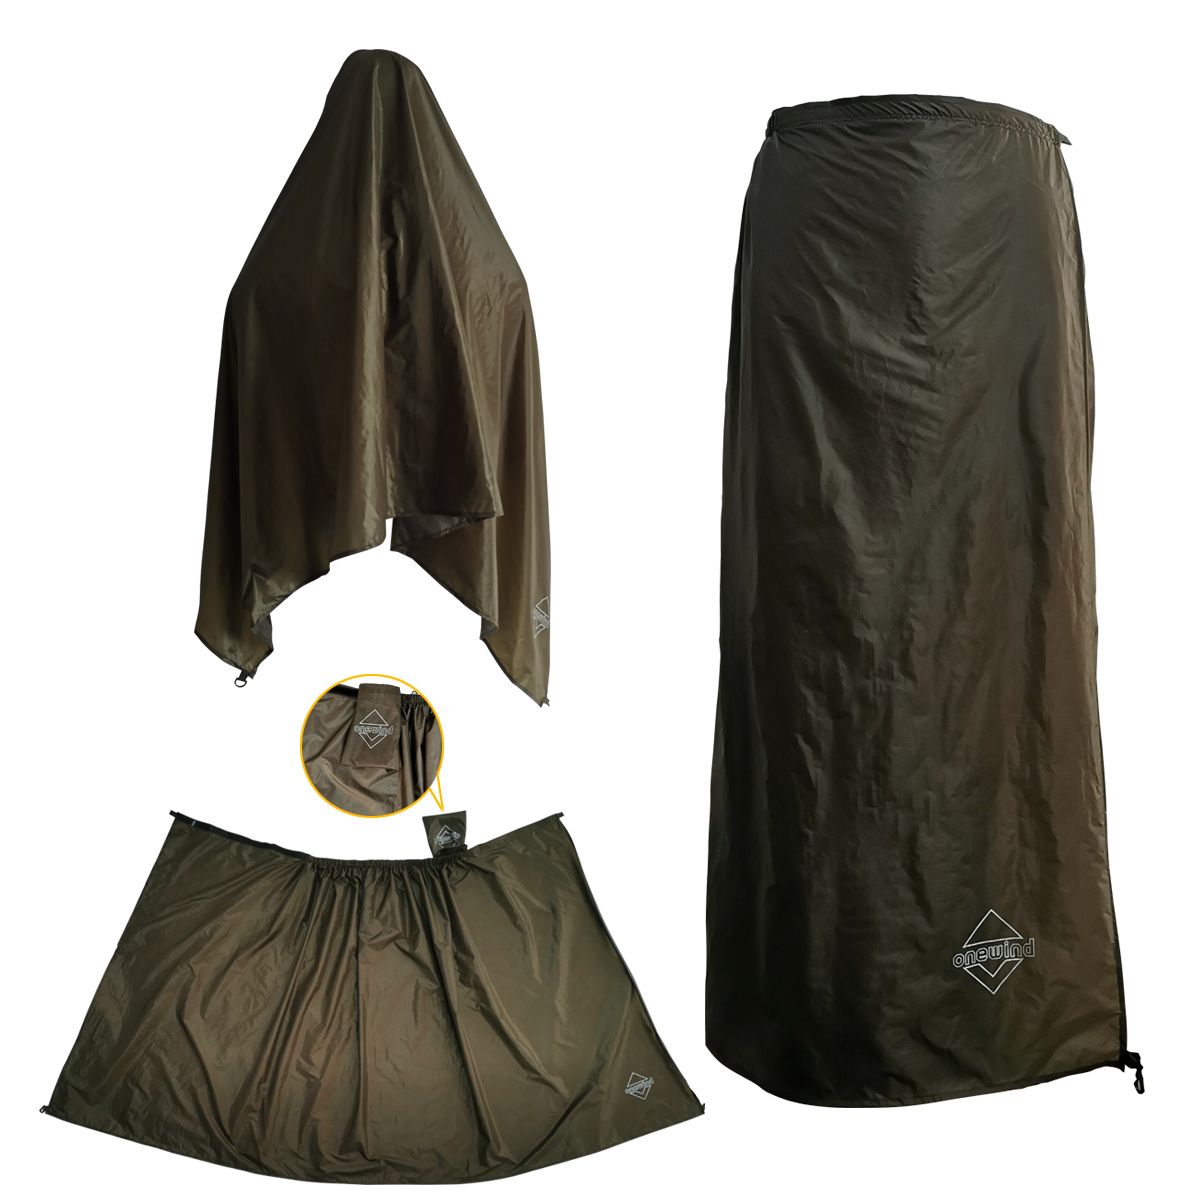 Lightweight 15D Silicone Coating Rain Gear Rainwear Long Rain Kilt  Waterproof Skirt Pants Trousers For Outdoor Hiking Camping